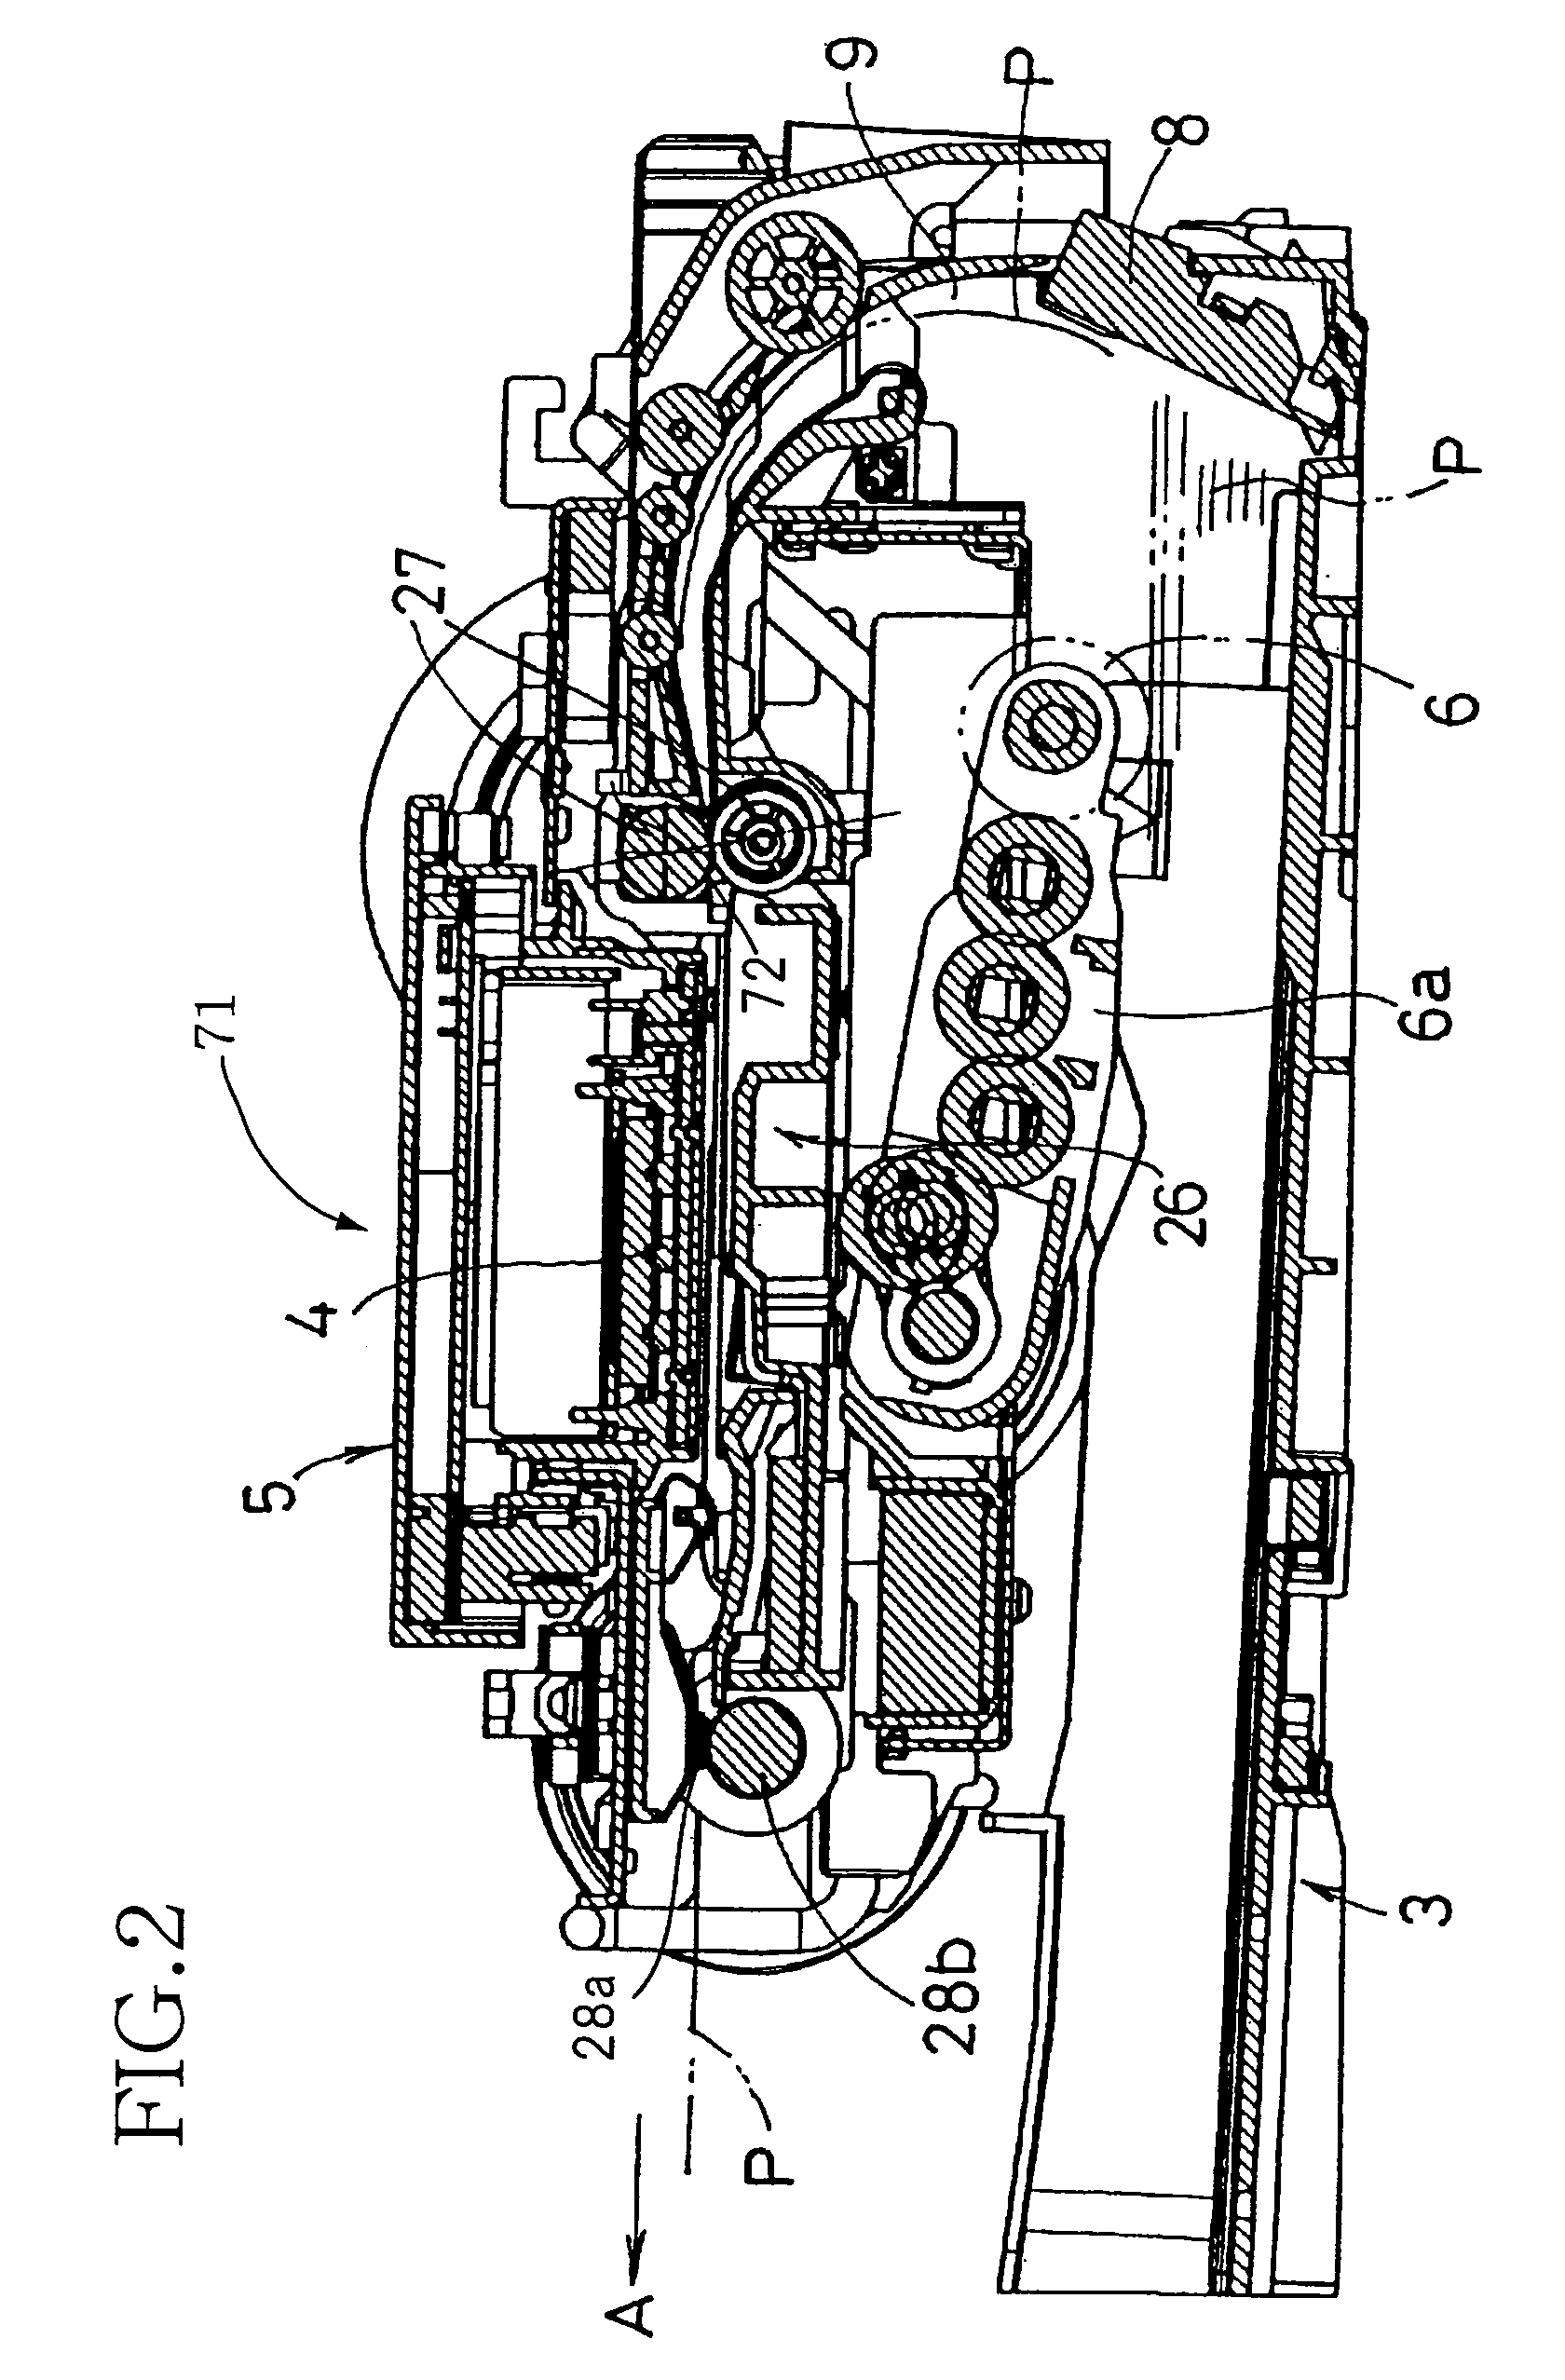 Image-forming apparatus